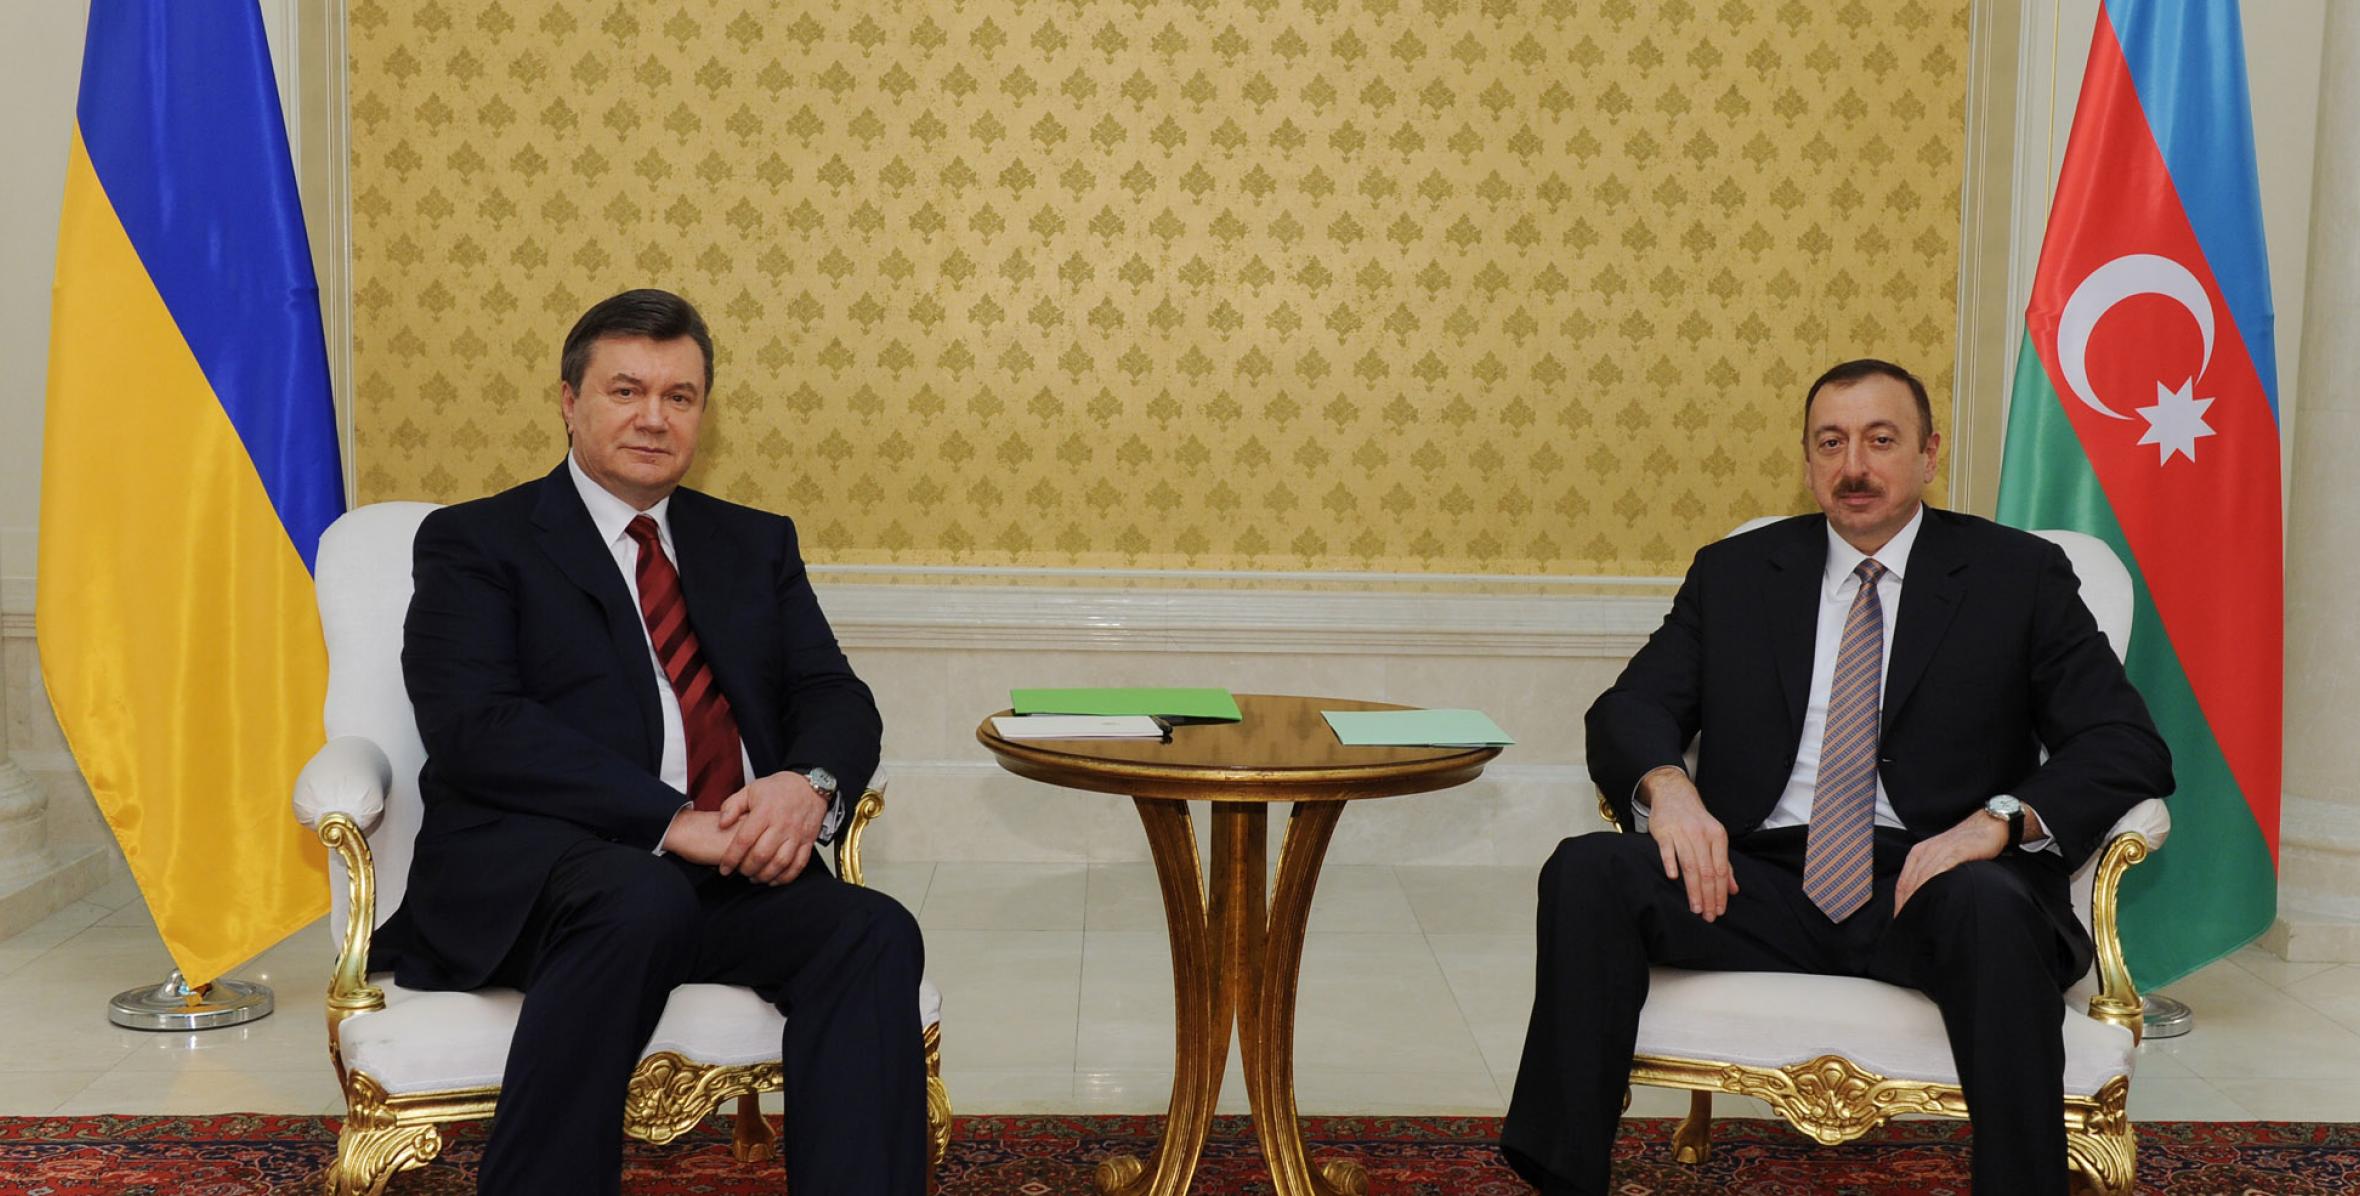 Ilham Aliyev had a one-on-one meeting with President of Ukraine Viktor Yanukovych